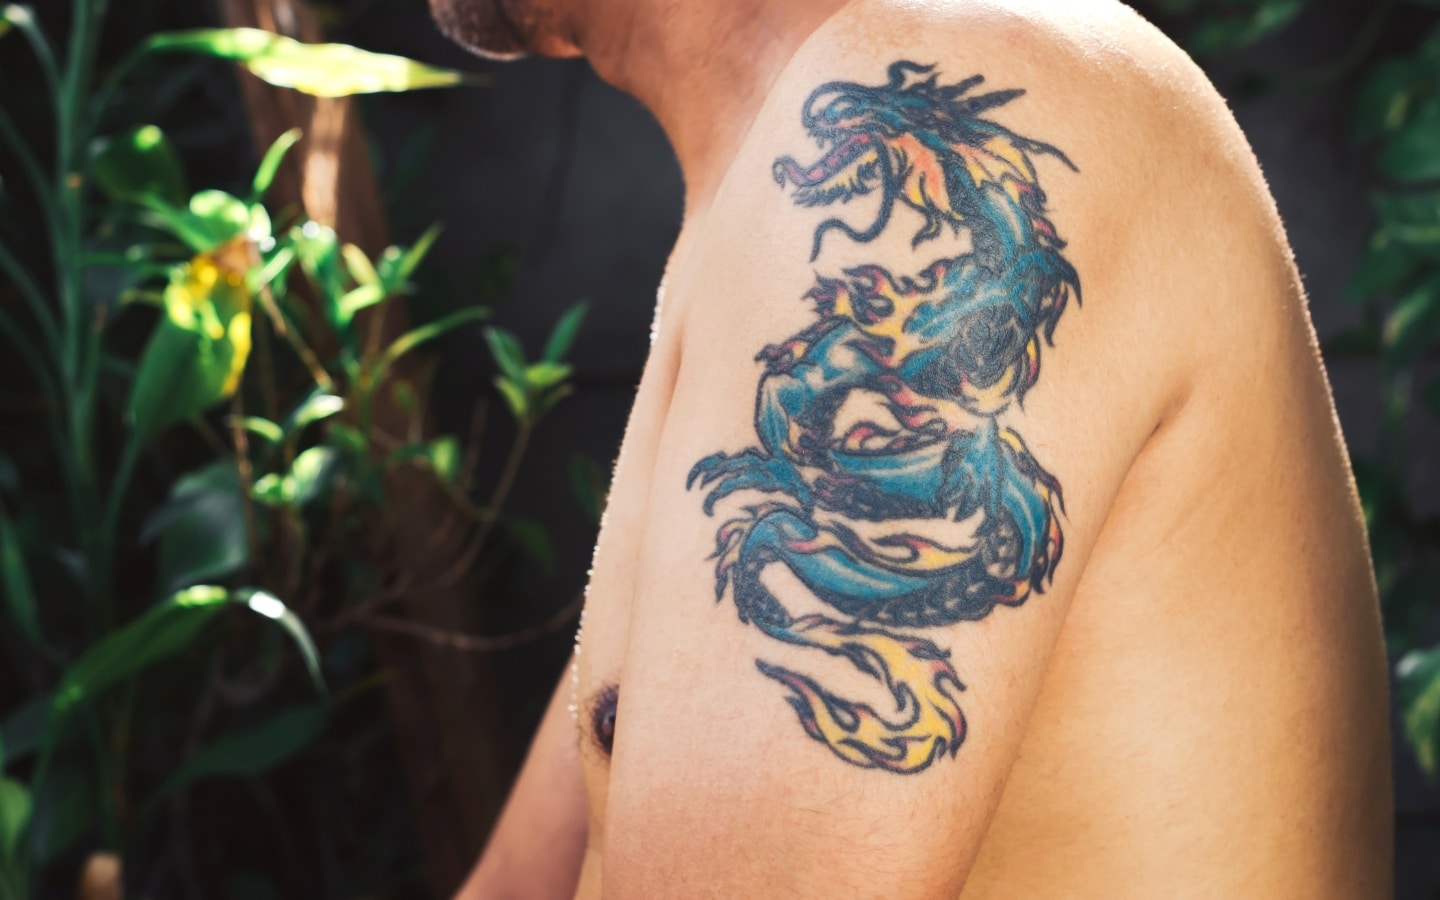 Symbolism Of The Black Dragon Tattoo